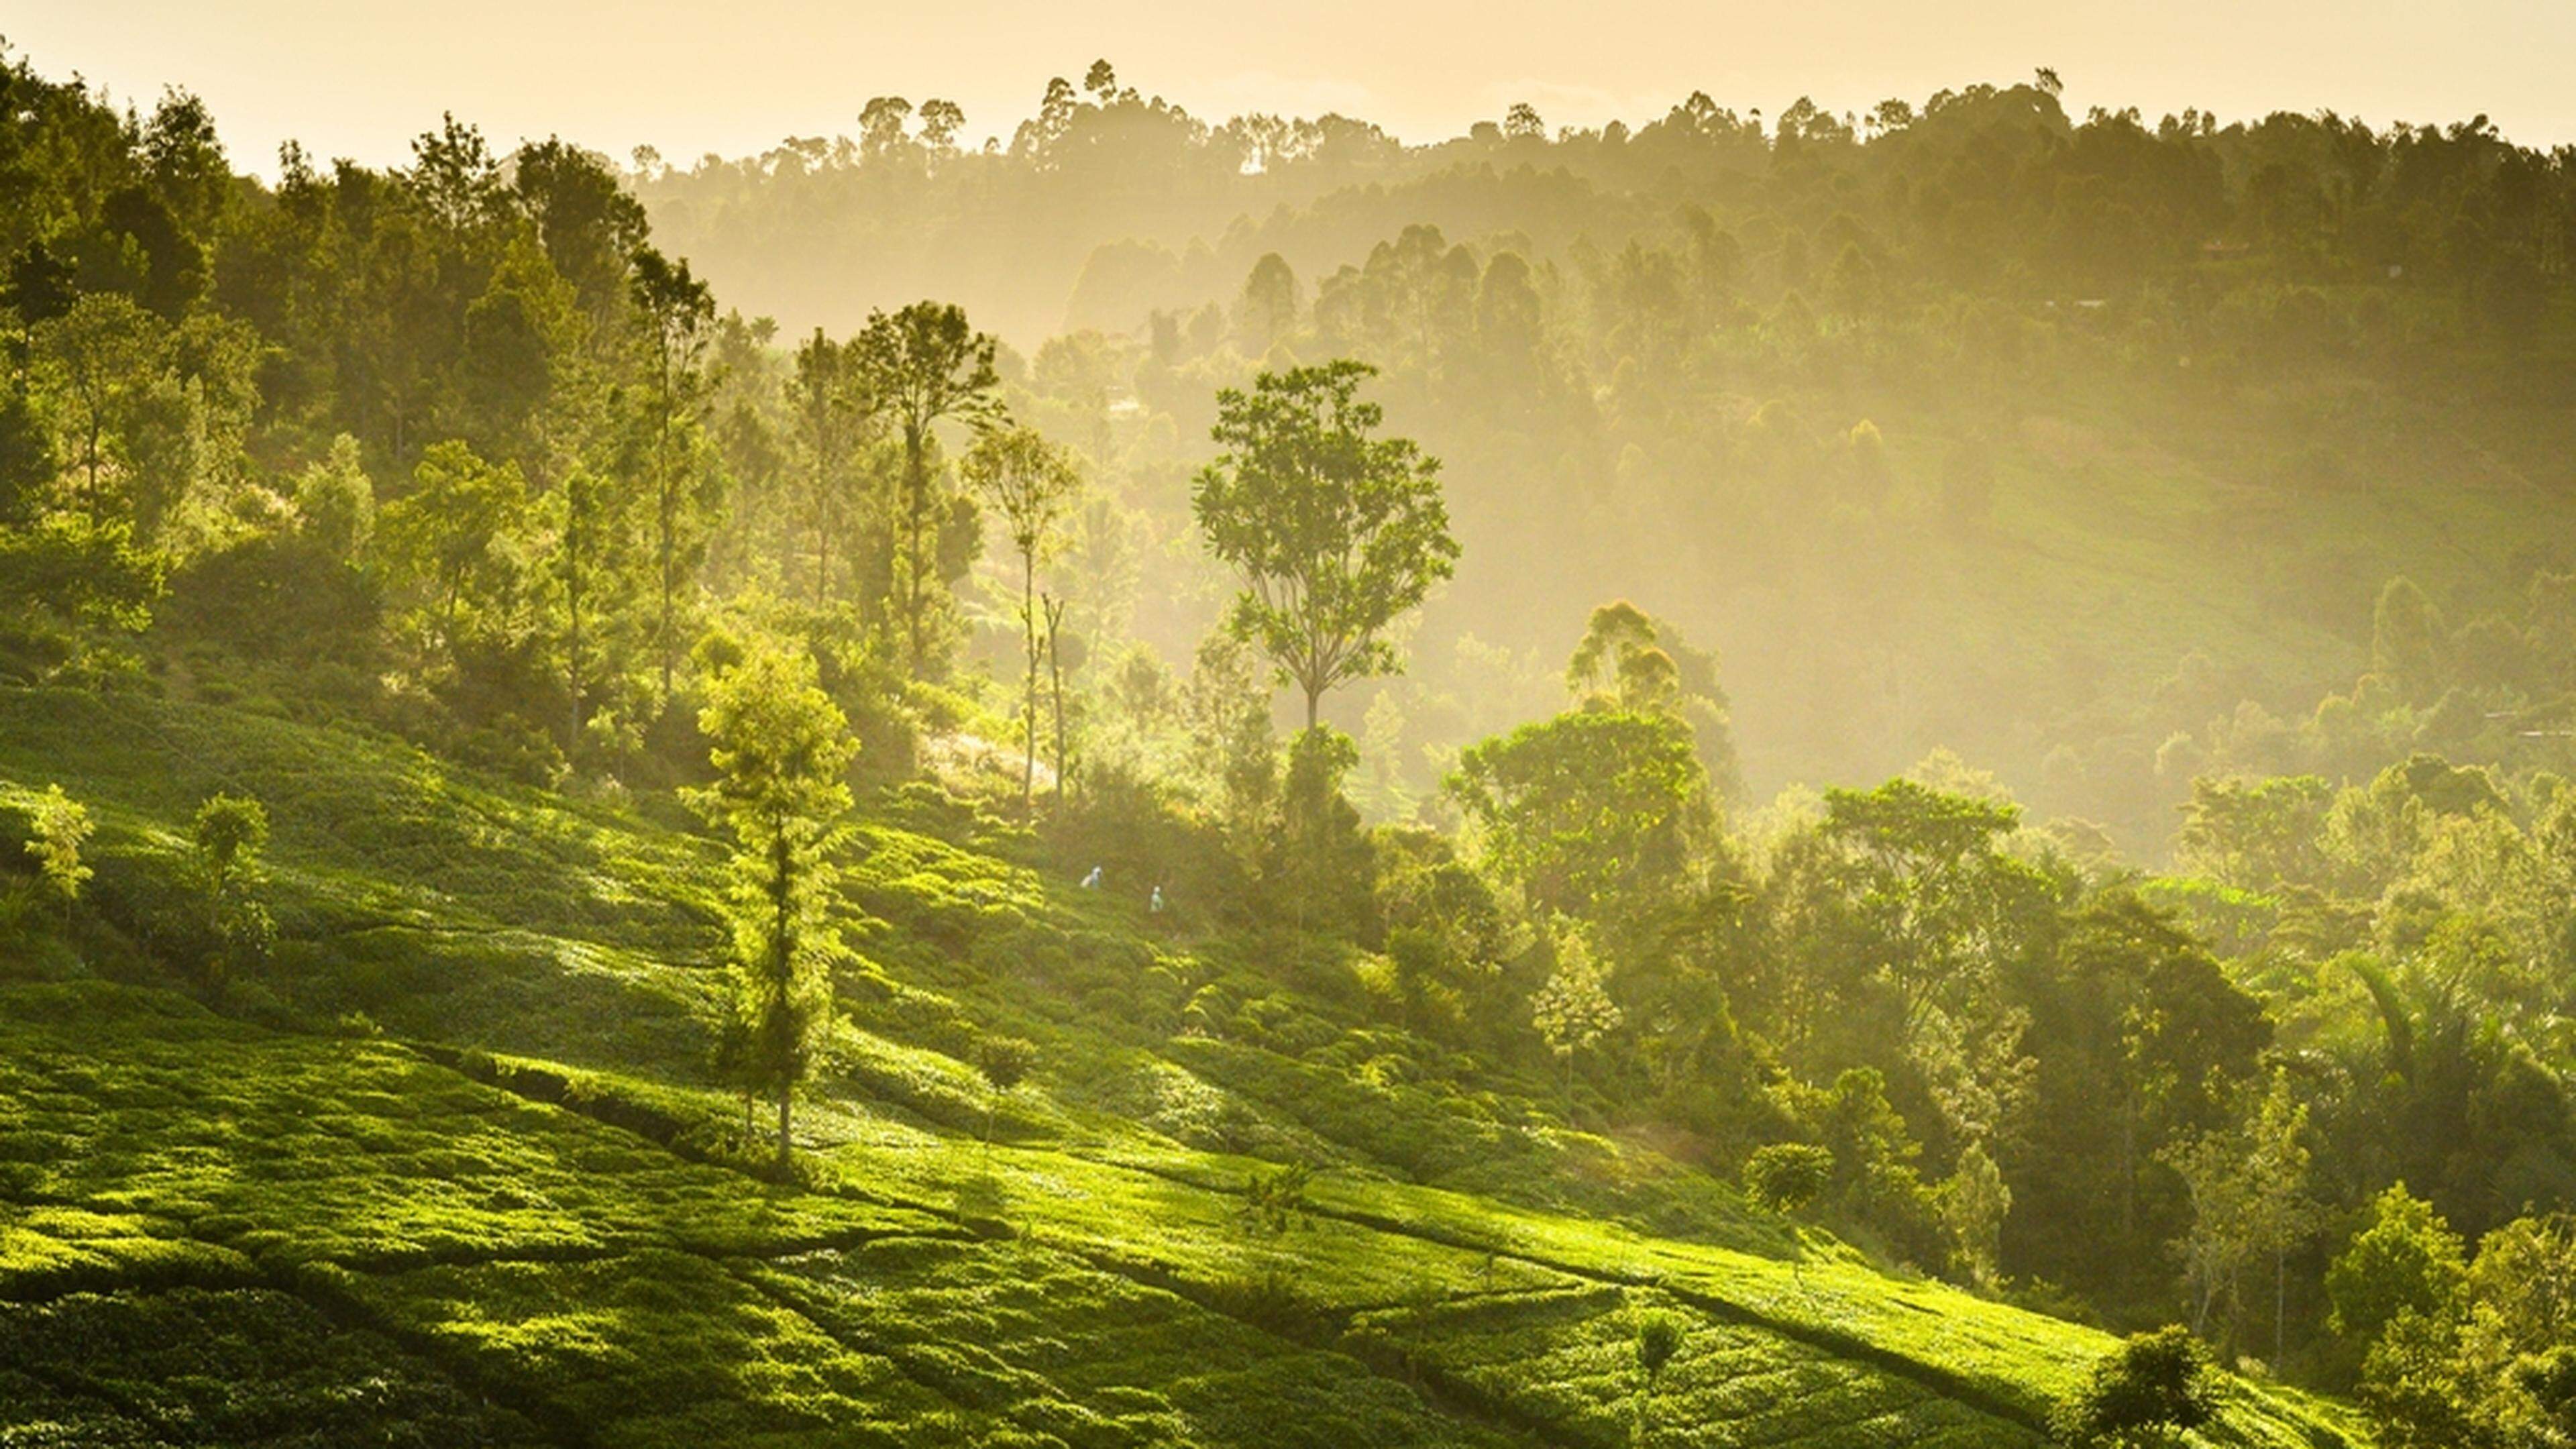 A tea plantation in Kenya